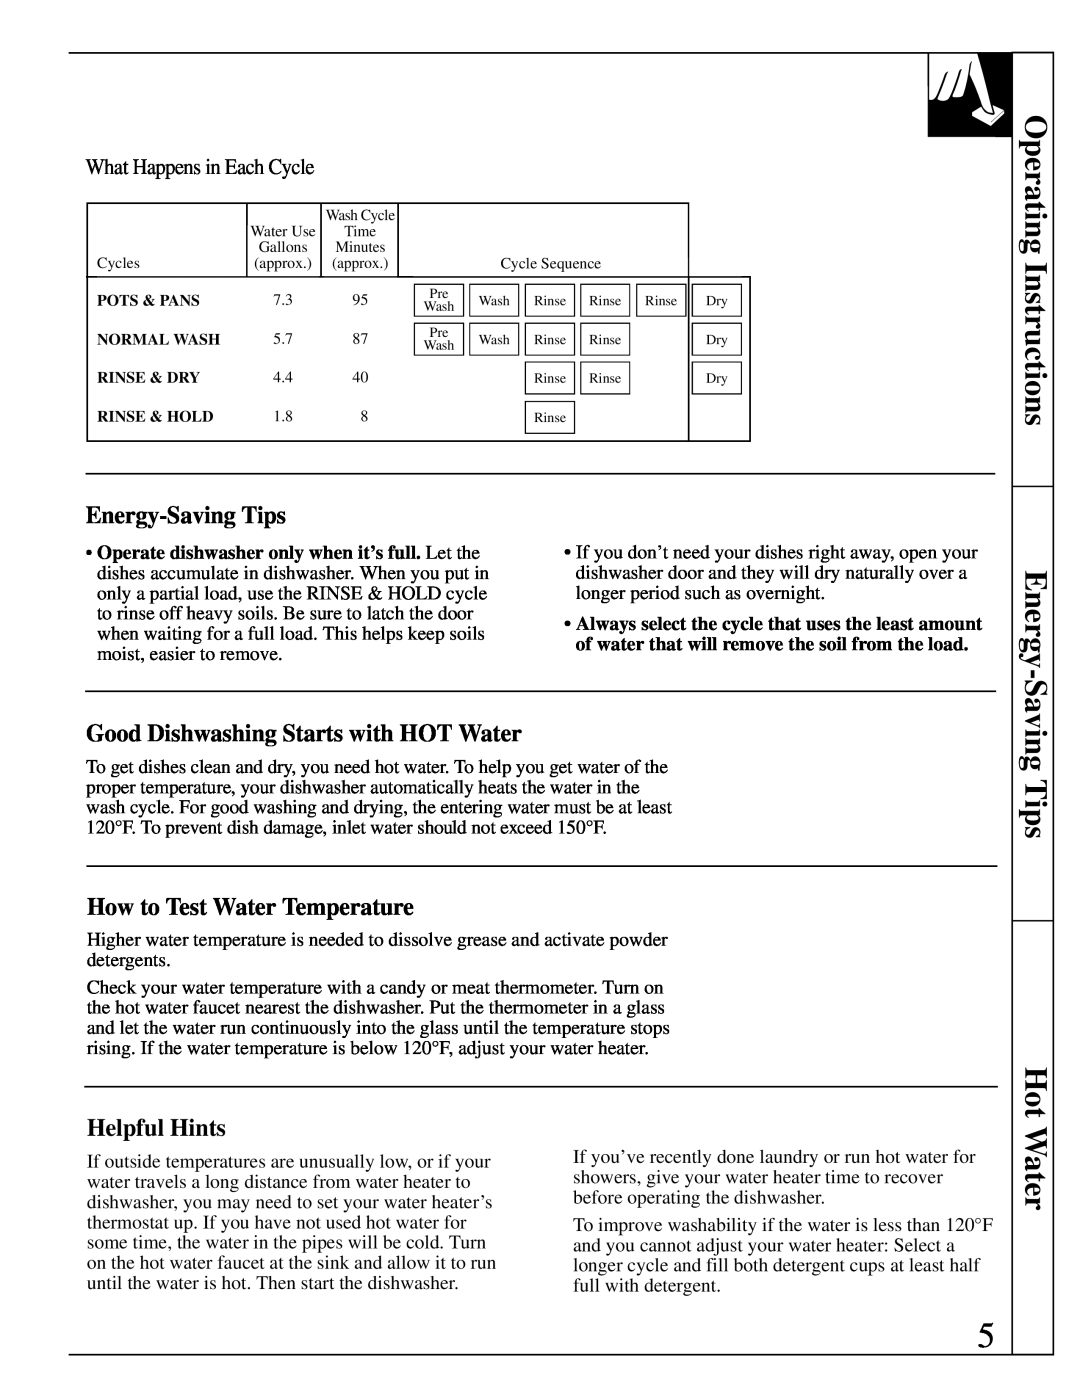 GE Monogram ZBD4600 manual Operating Instructions Energy-SavingTips, Hot Water, Good Dishwashing Starts with HOT Water 